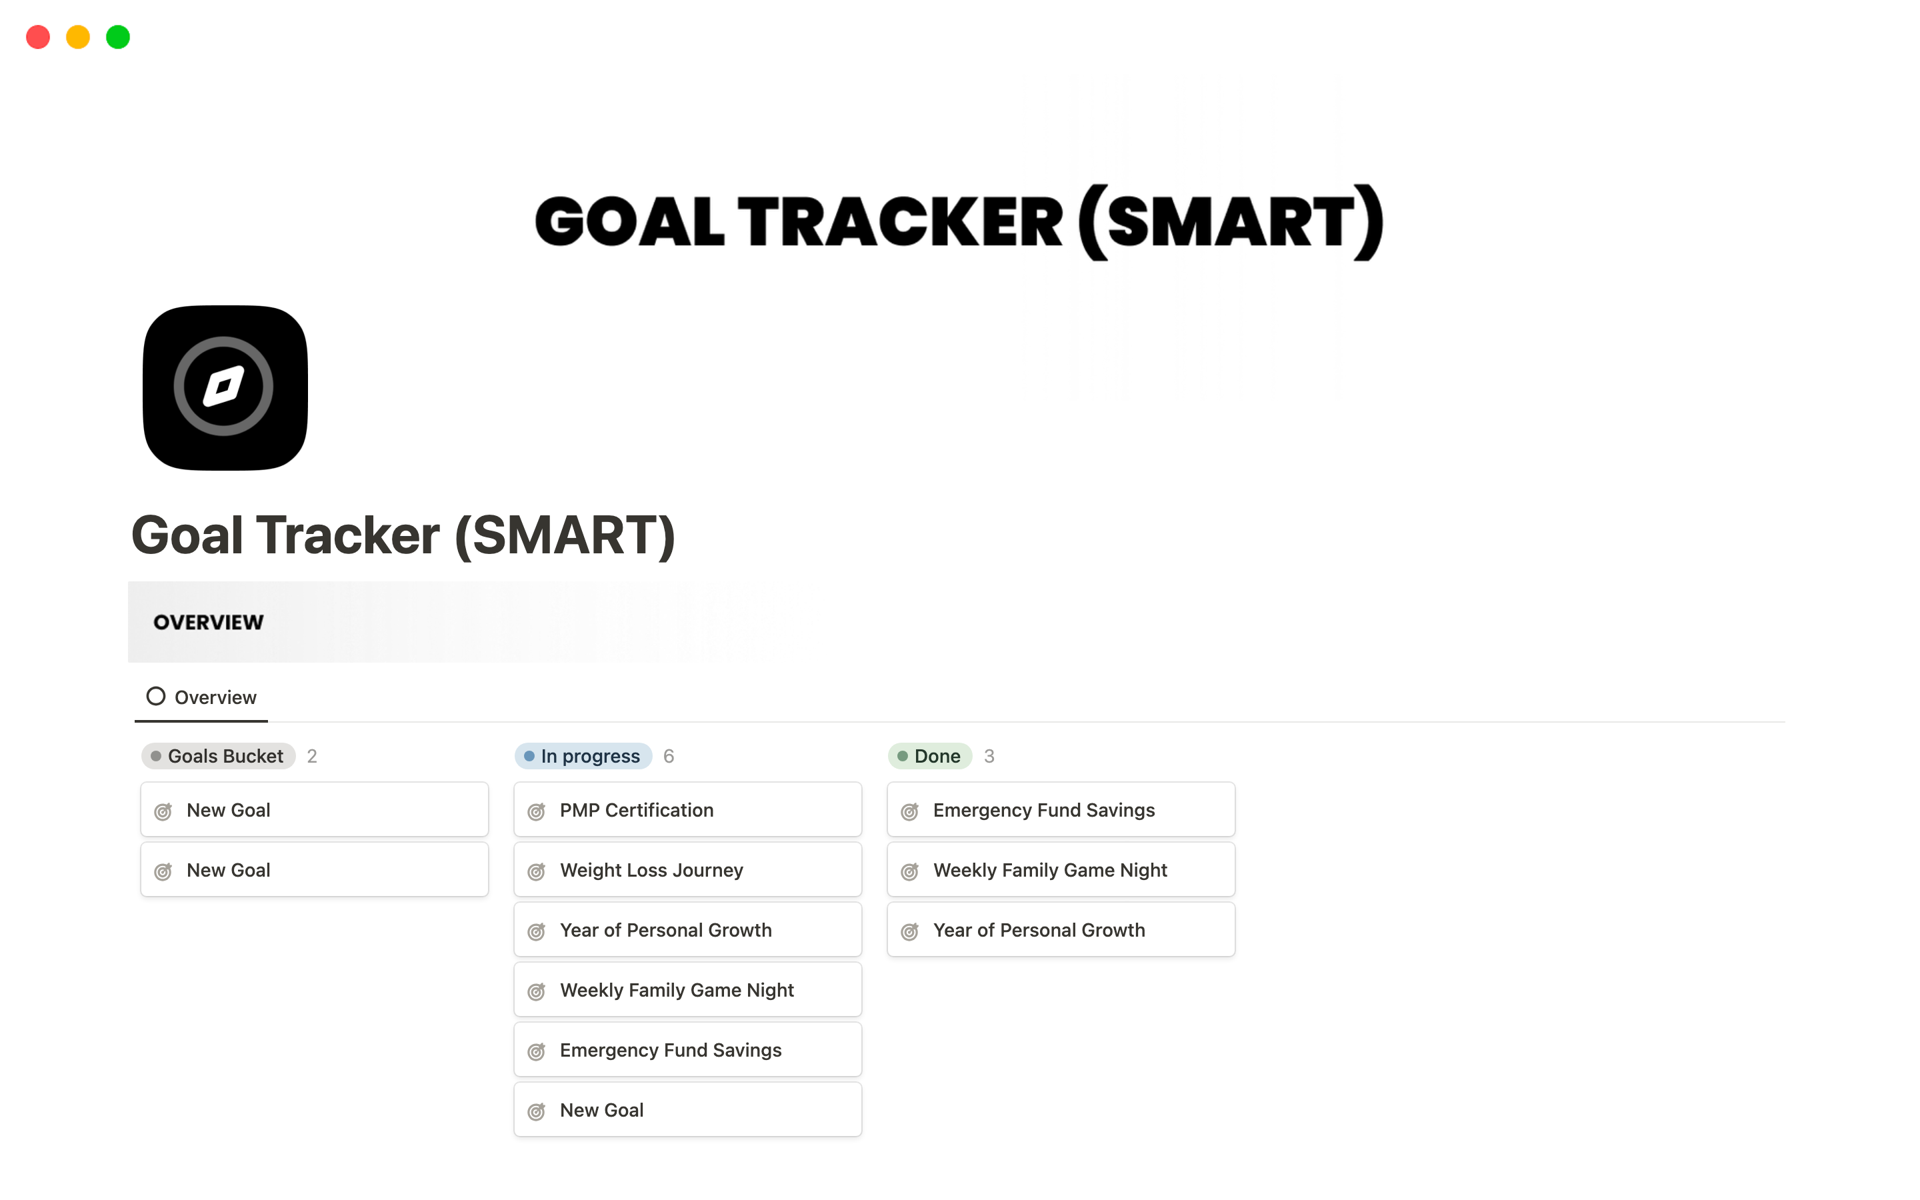 Aperçu du modèle de Goal Tracker (SMART)